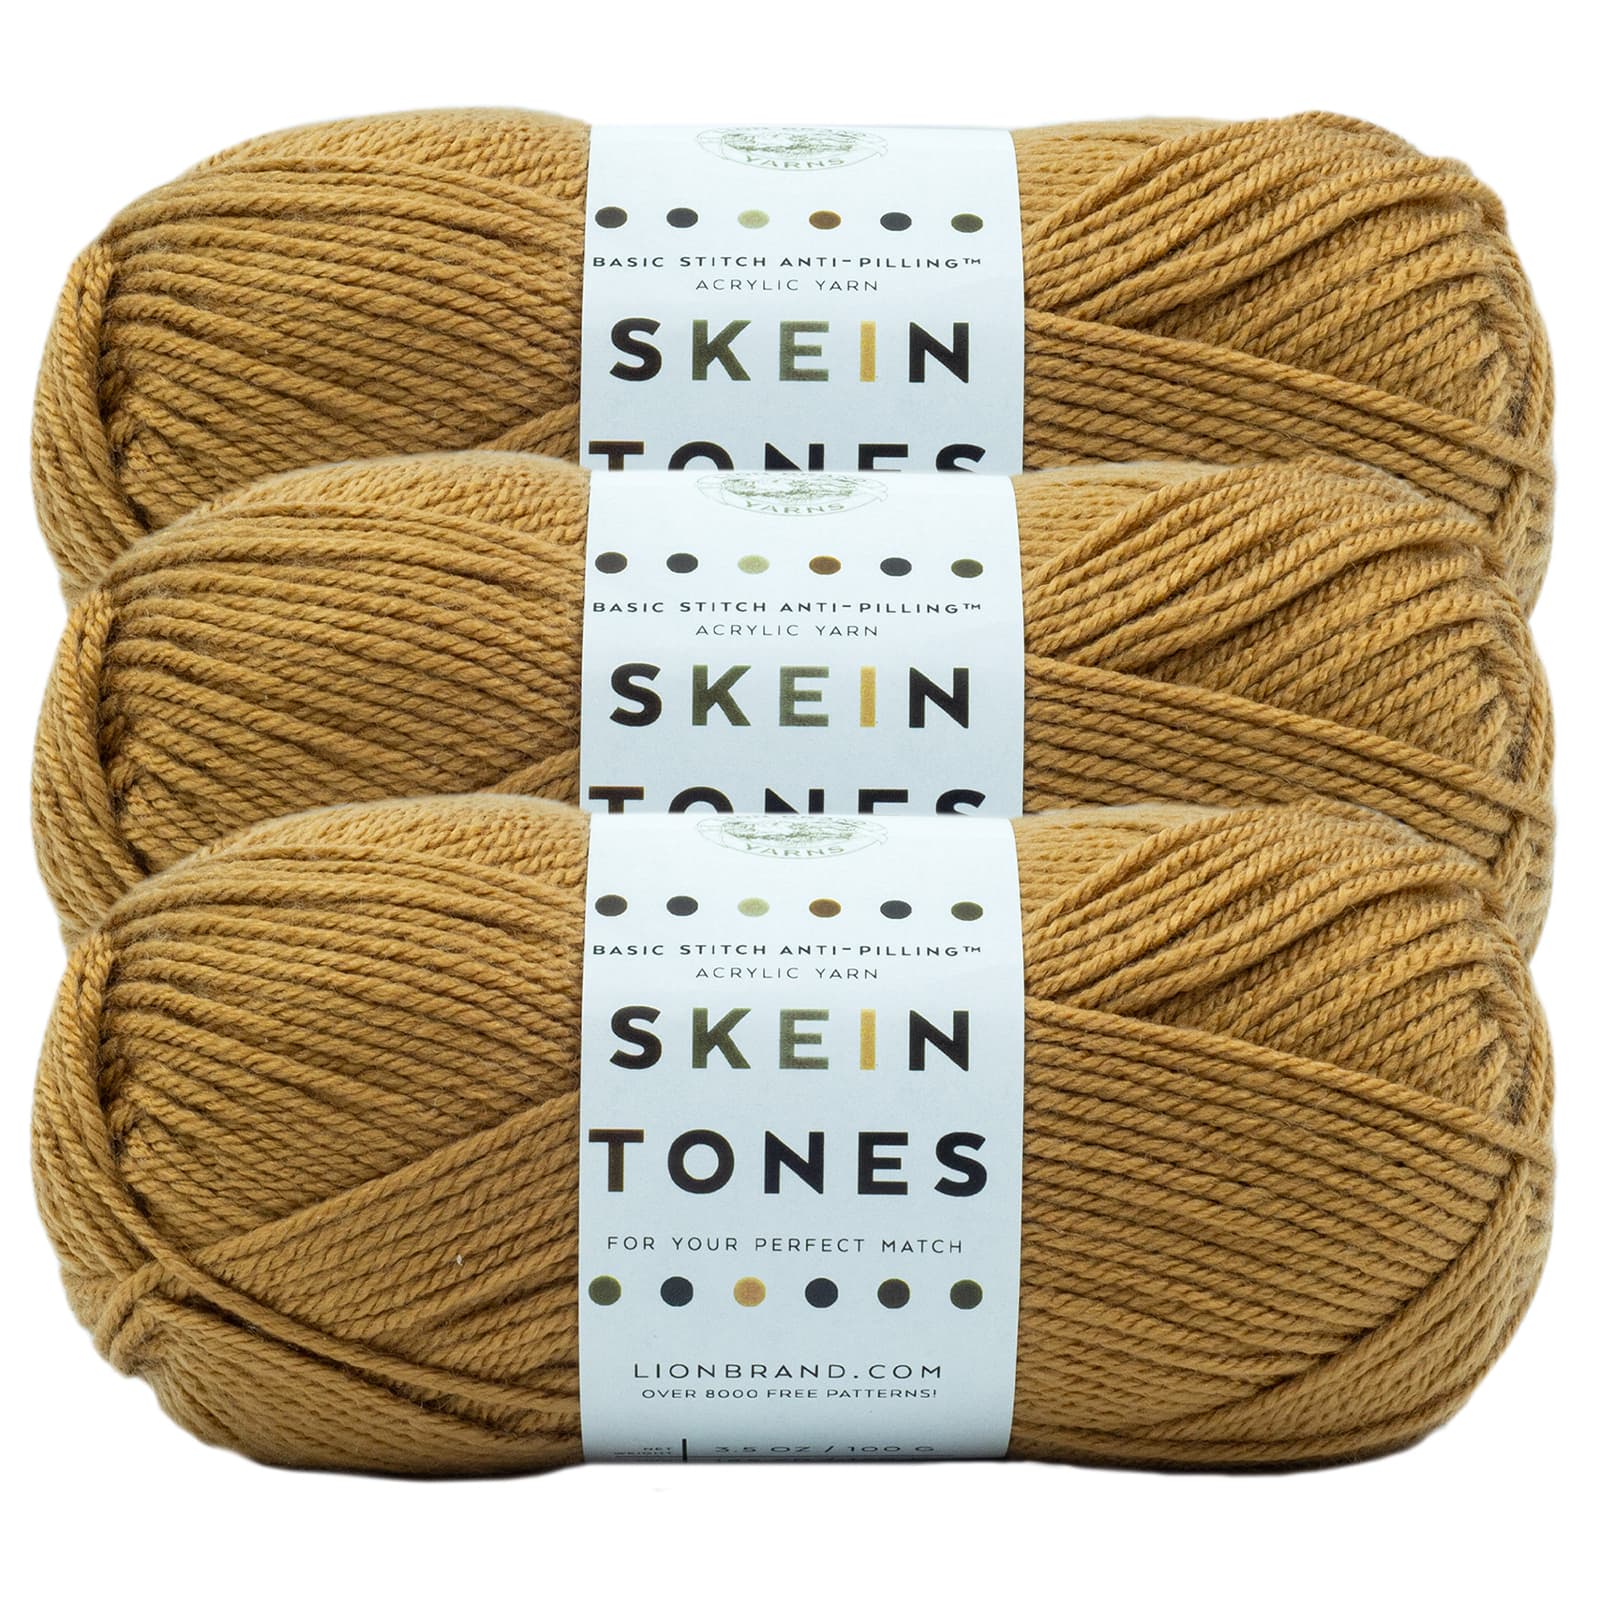 Lion Brand® Basic Stitch Anti-Pilling™ Skein Tones Yarn